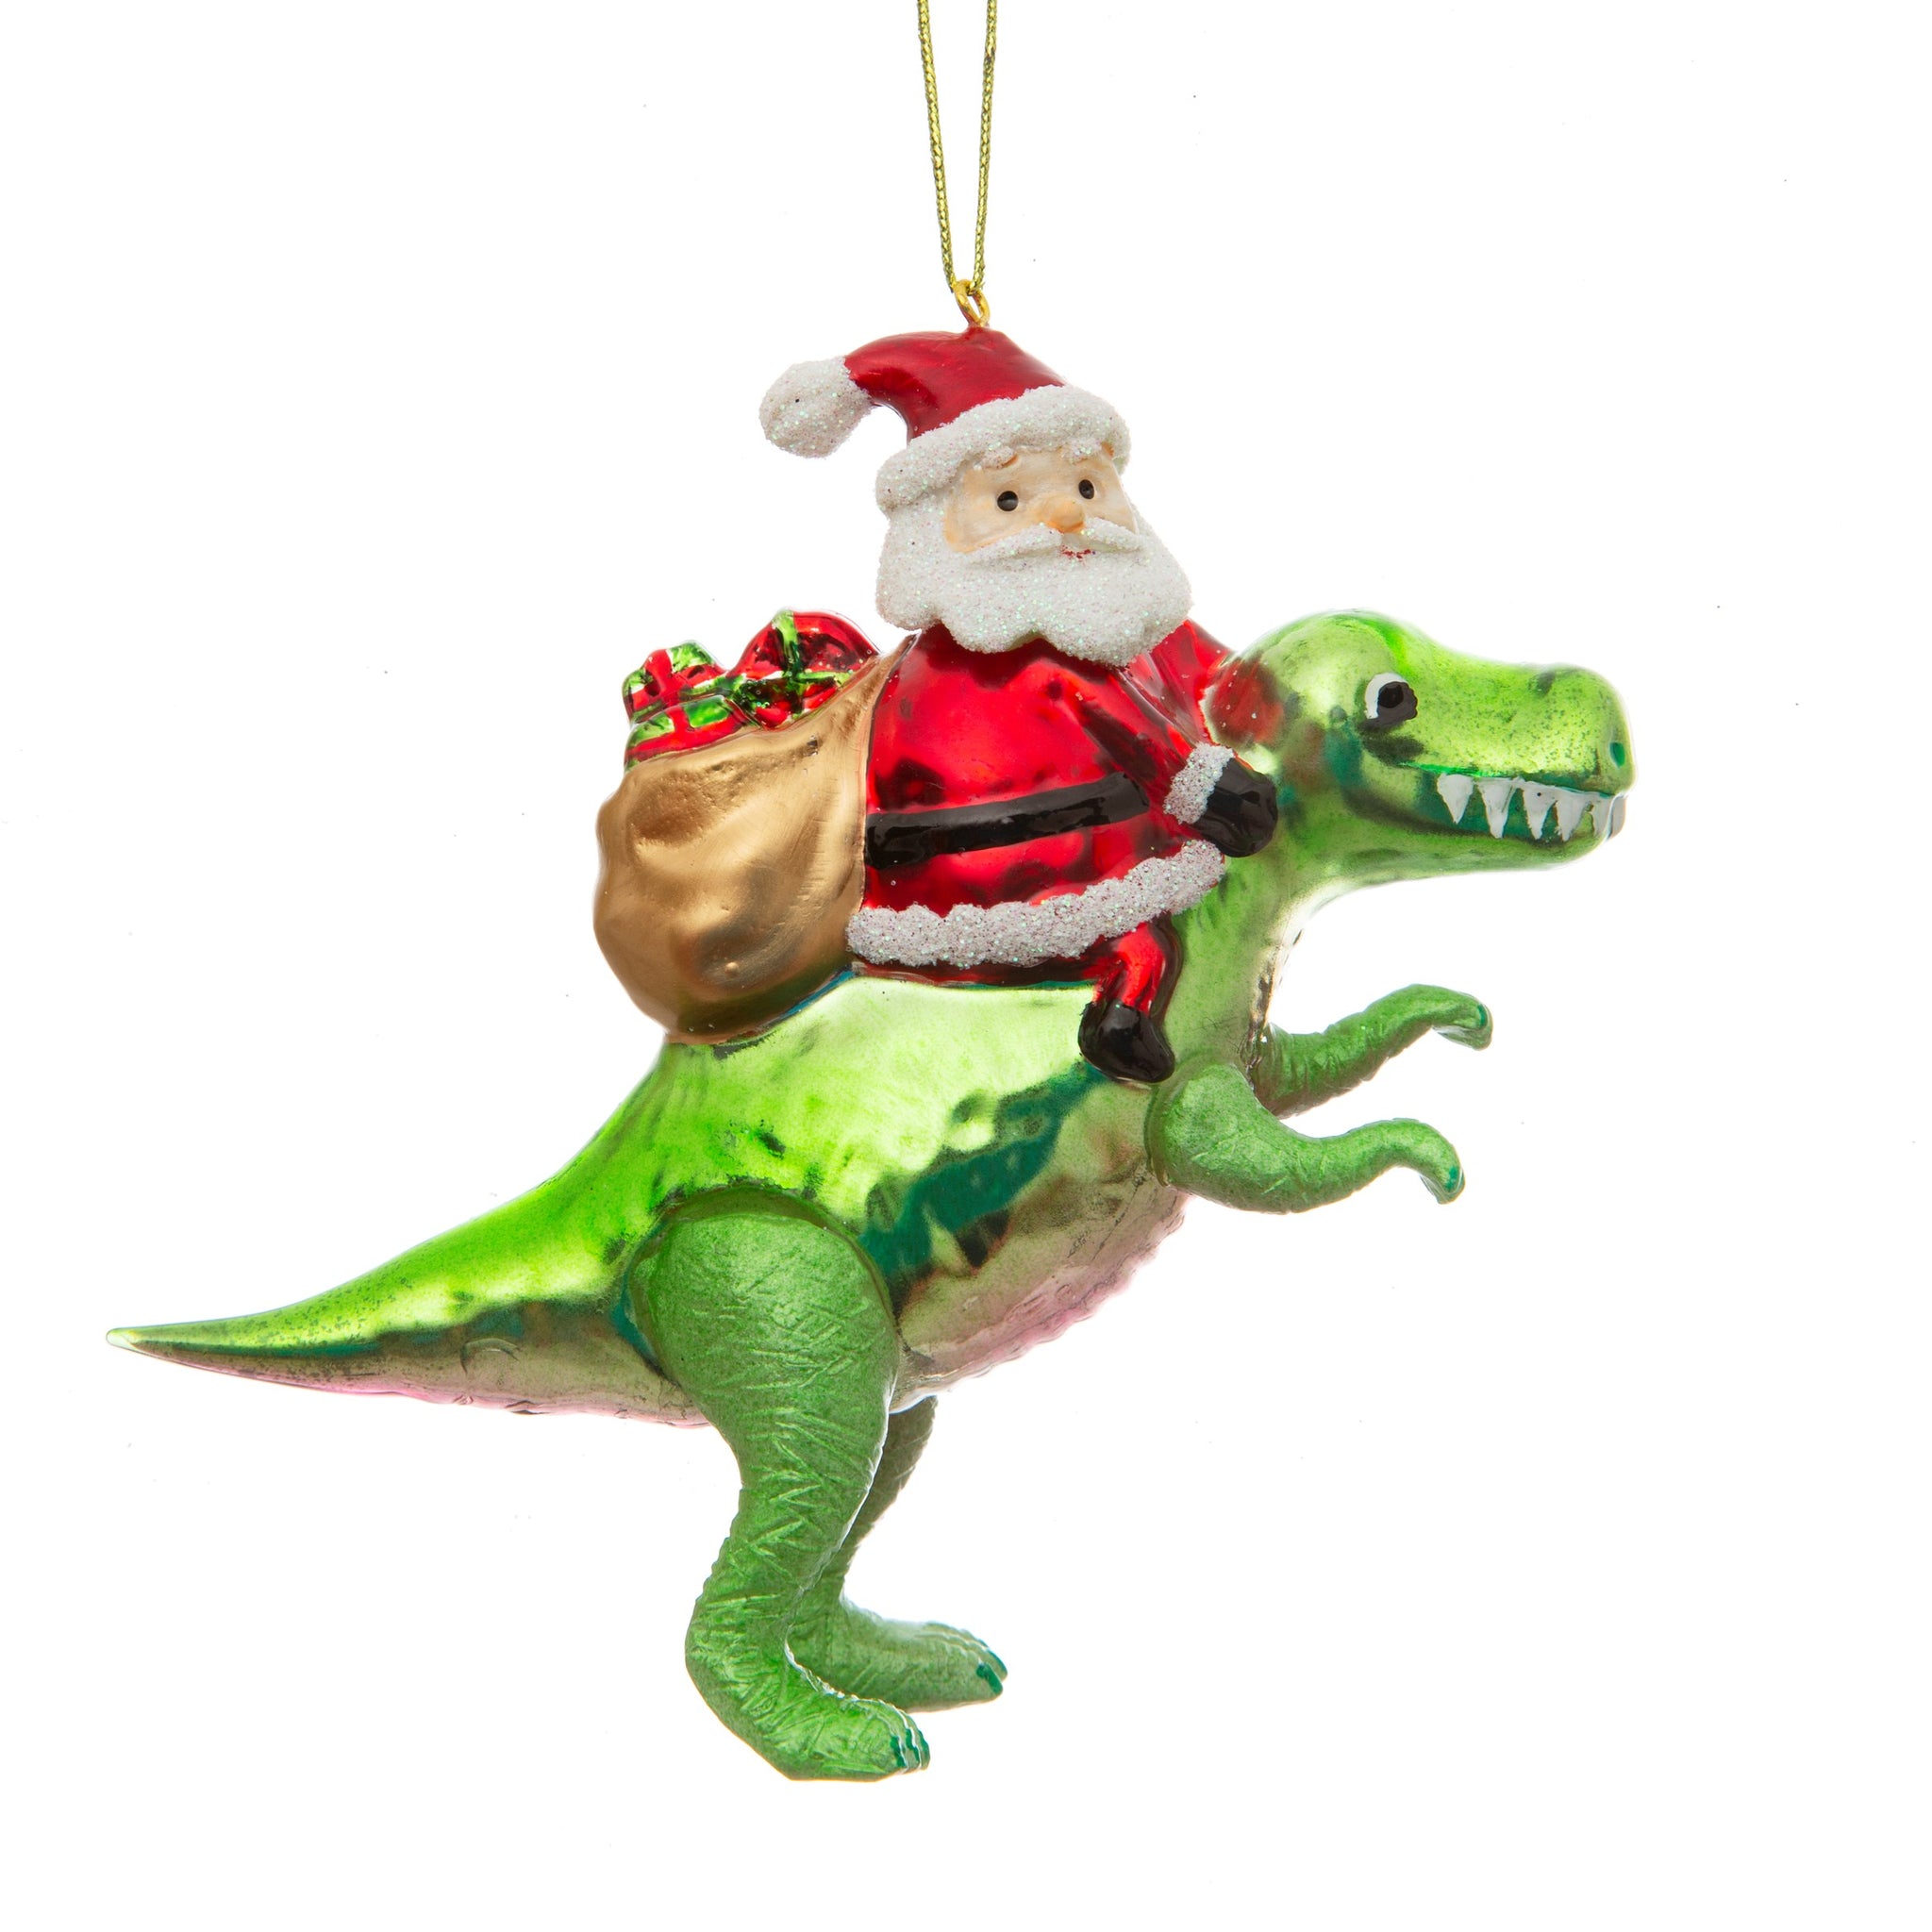 Santa on a Dinosaur!